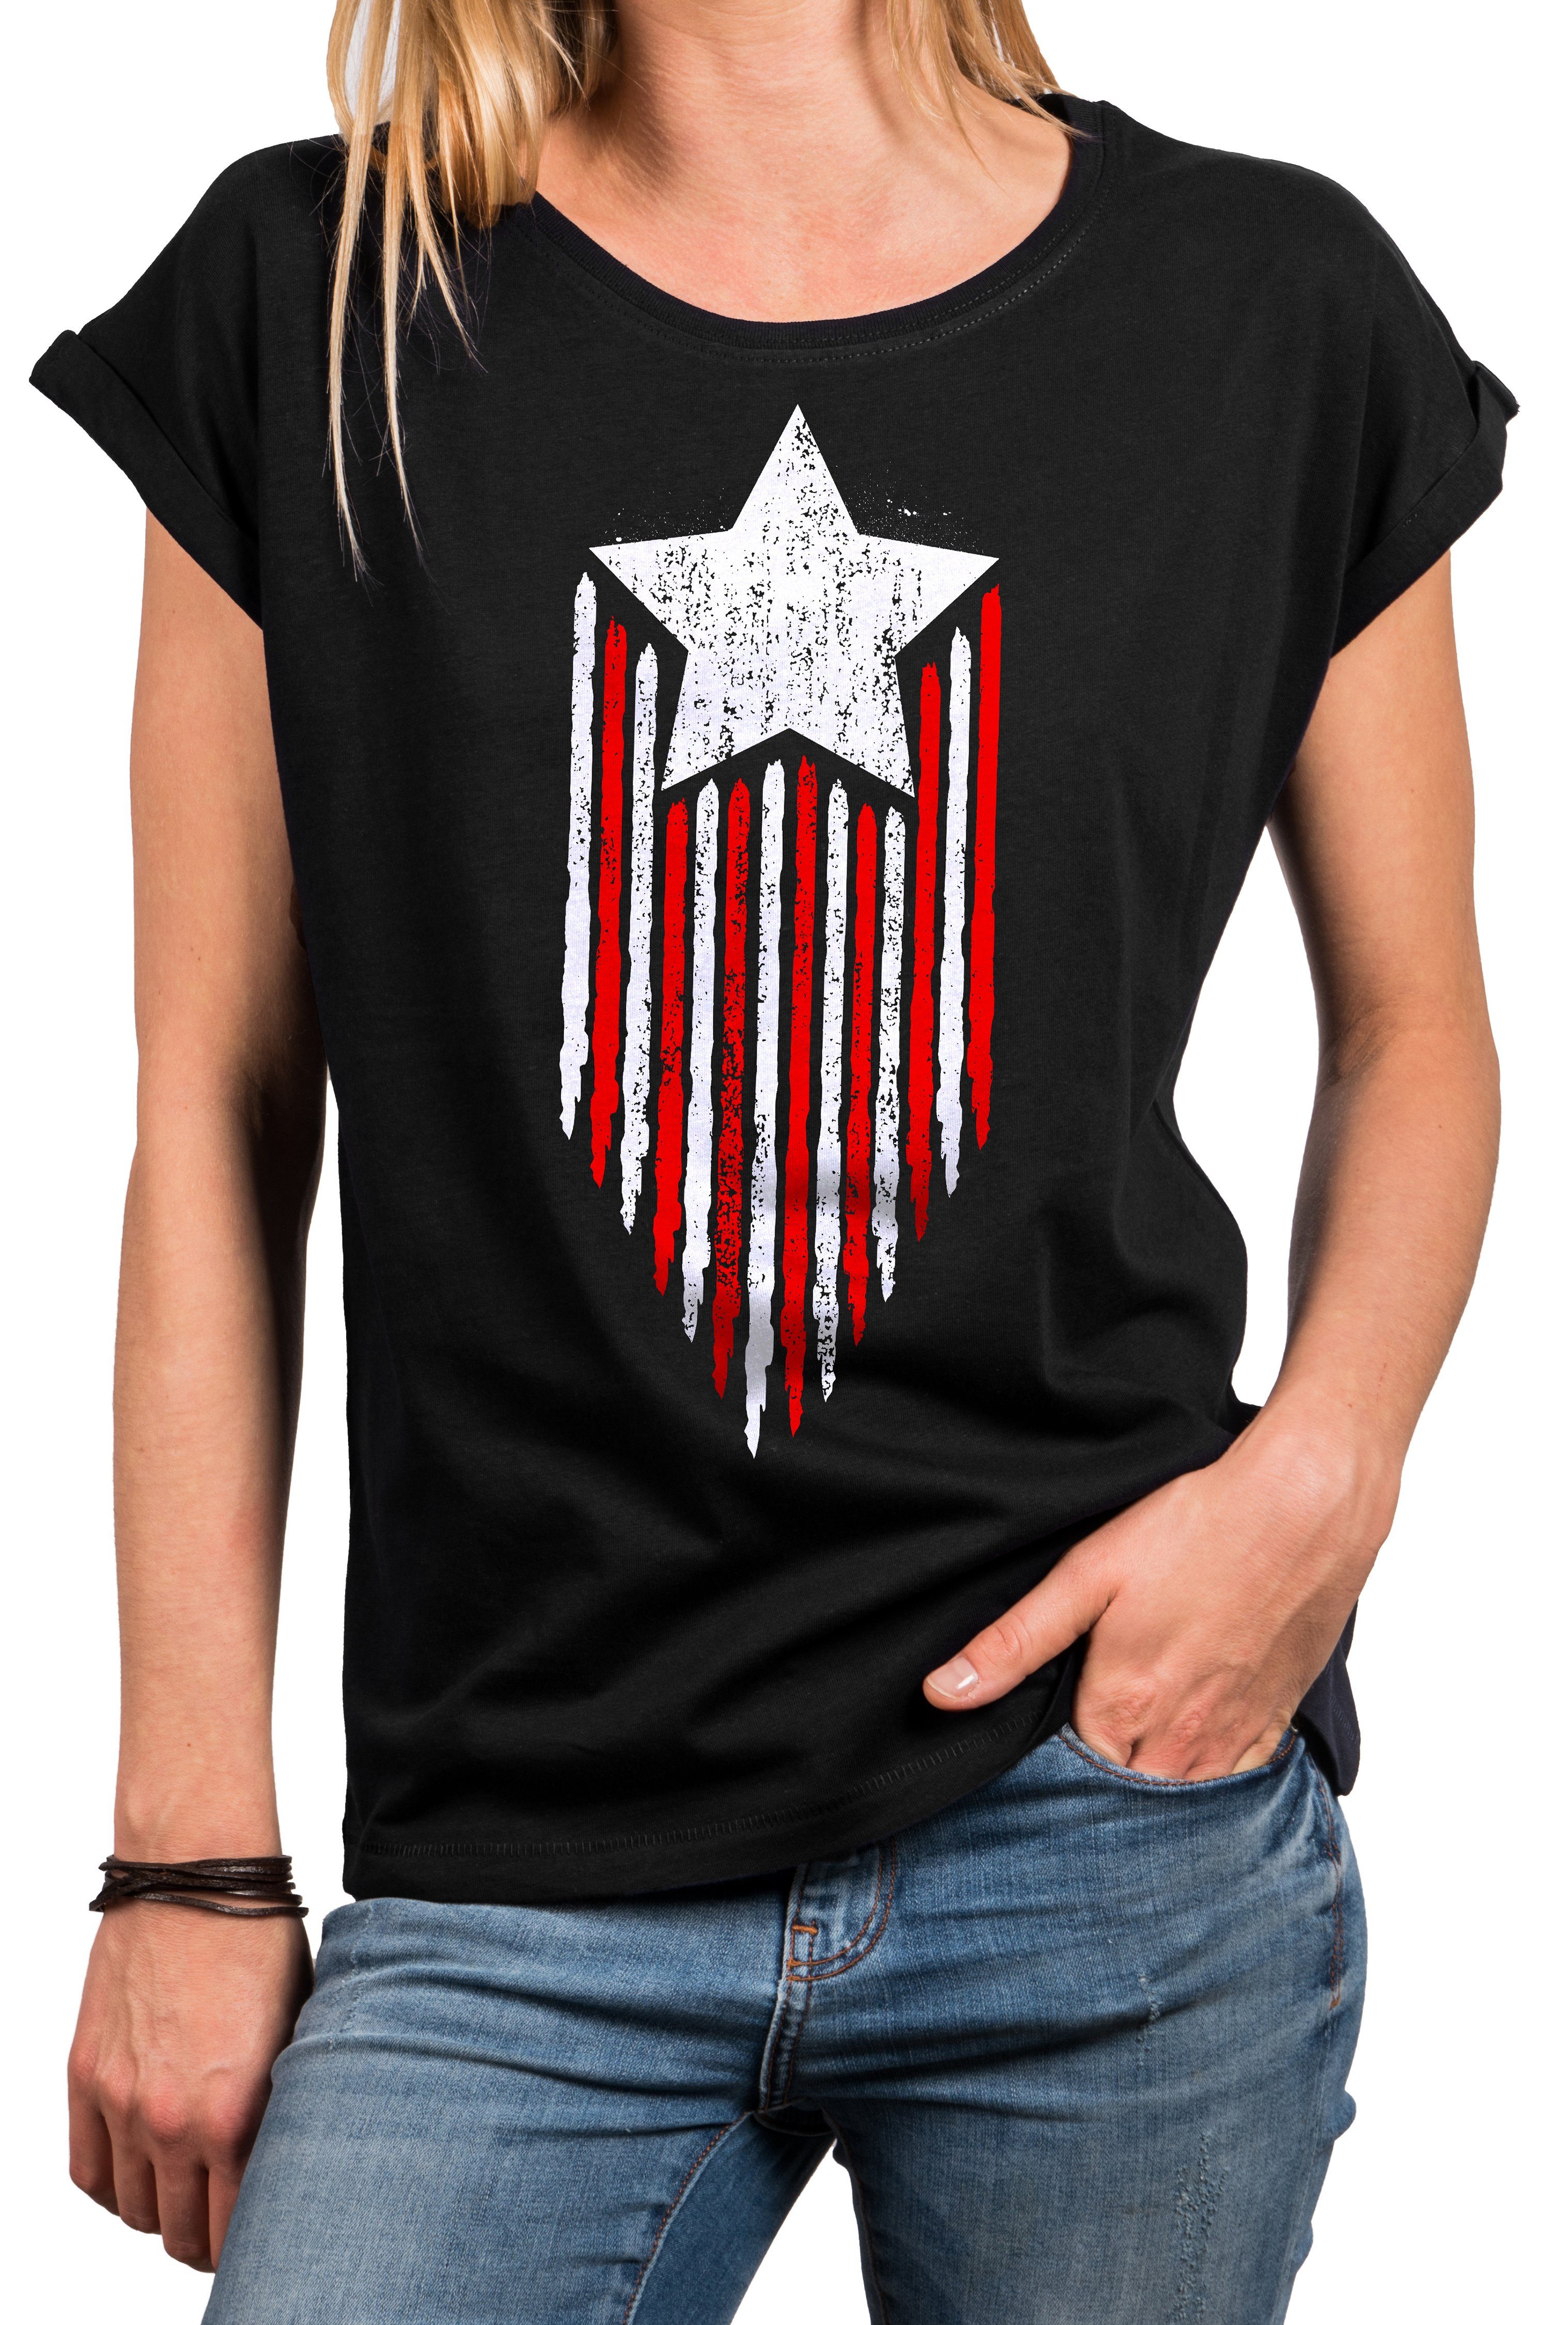 MAKAYA Print-Shirt Vintage Amerika Fahne amerikanische Flagge Damen Top Kurzarmshirt, große Größen Schwarz